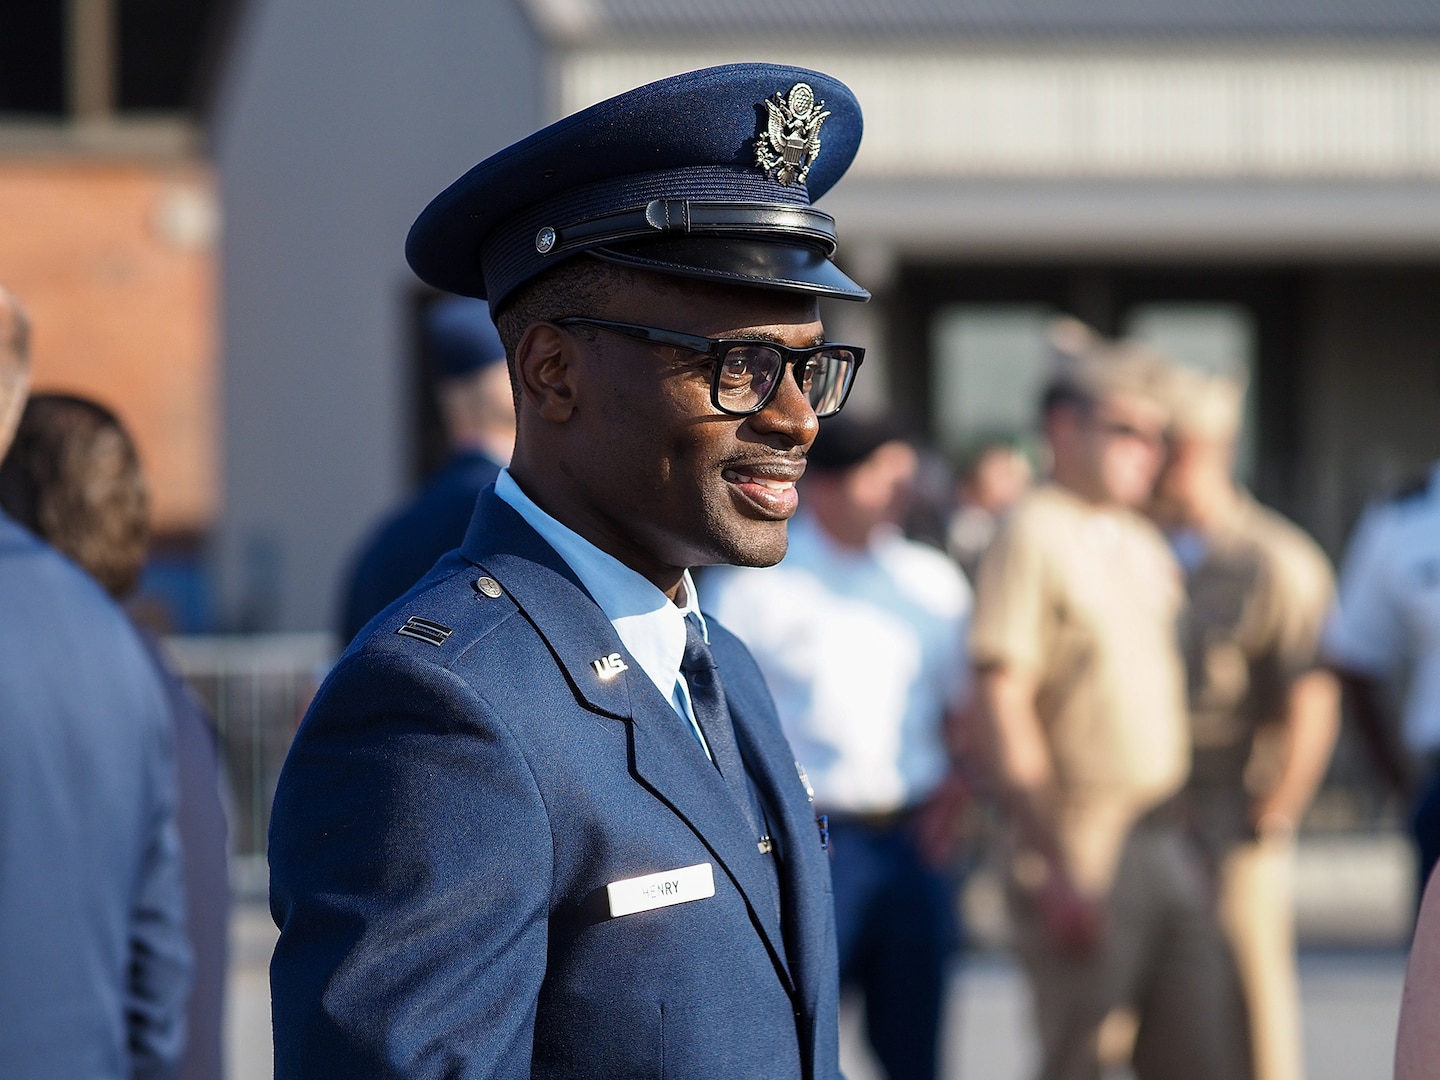 A man in a blue uniform and cap.